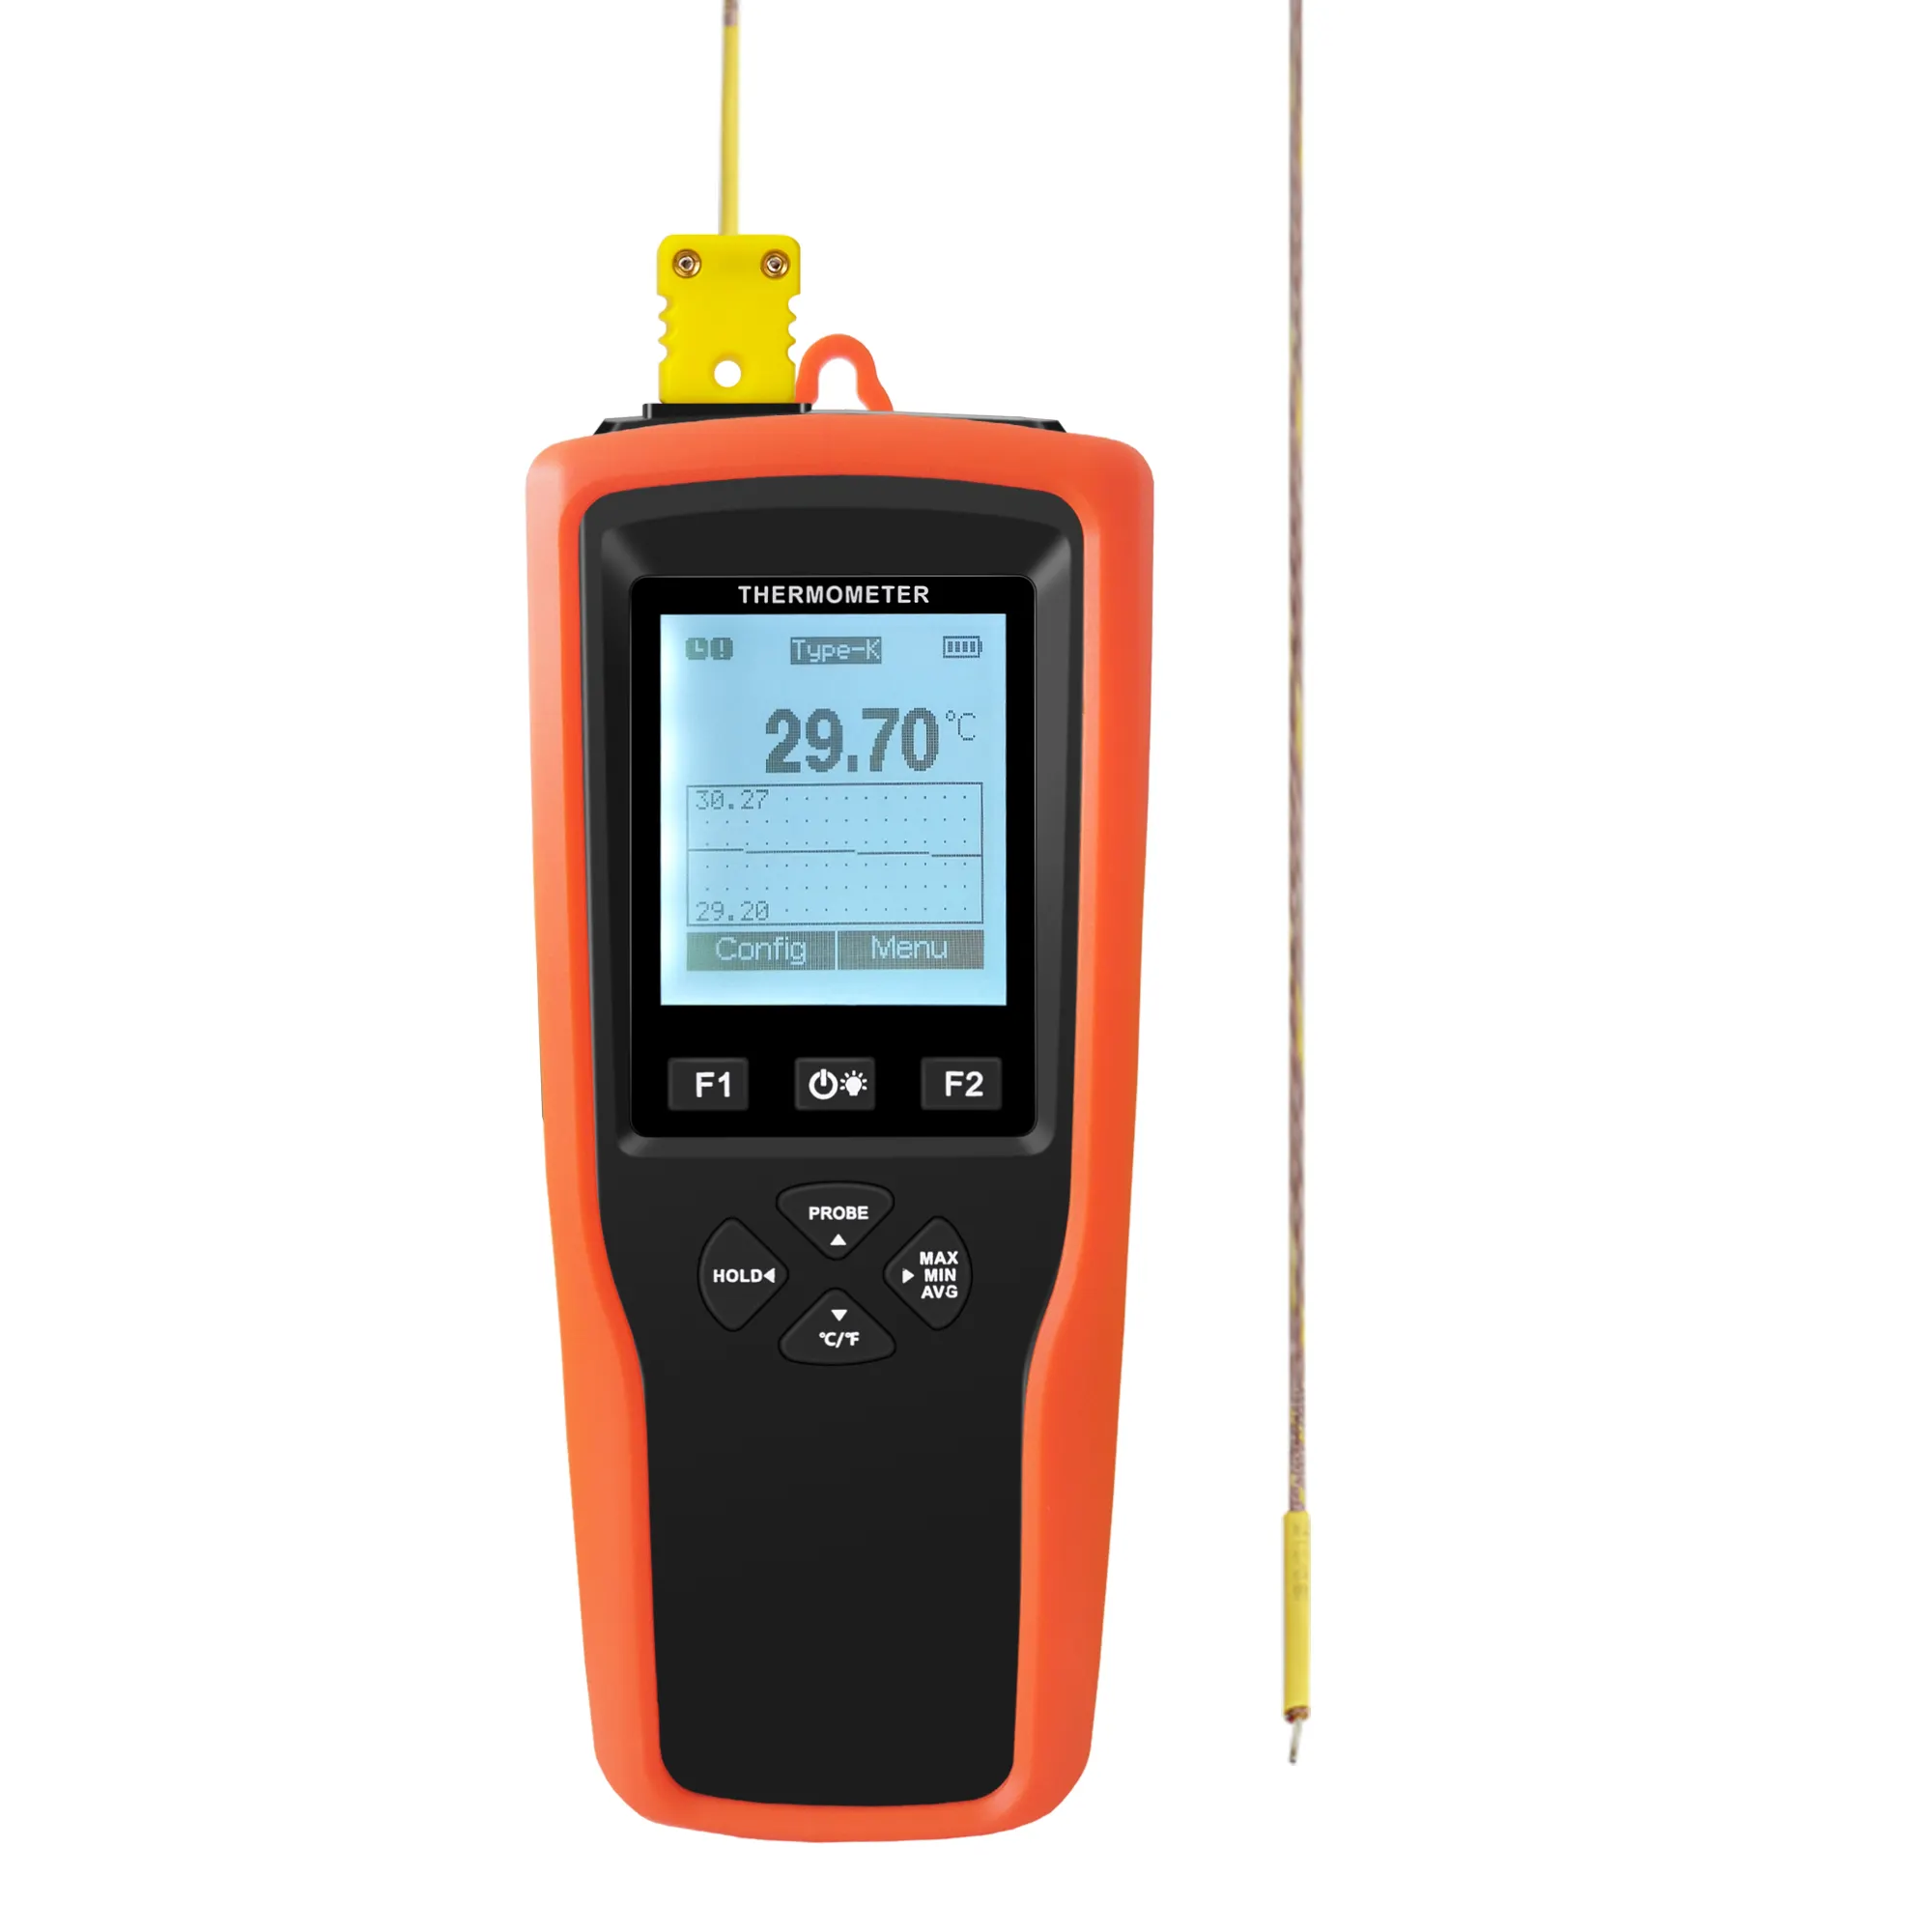 Yowexa YET-610L satu saluran K T J Thermocouple Probe temperatur Data Logger Thermometer